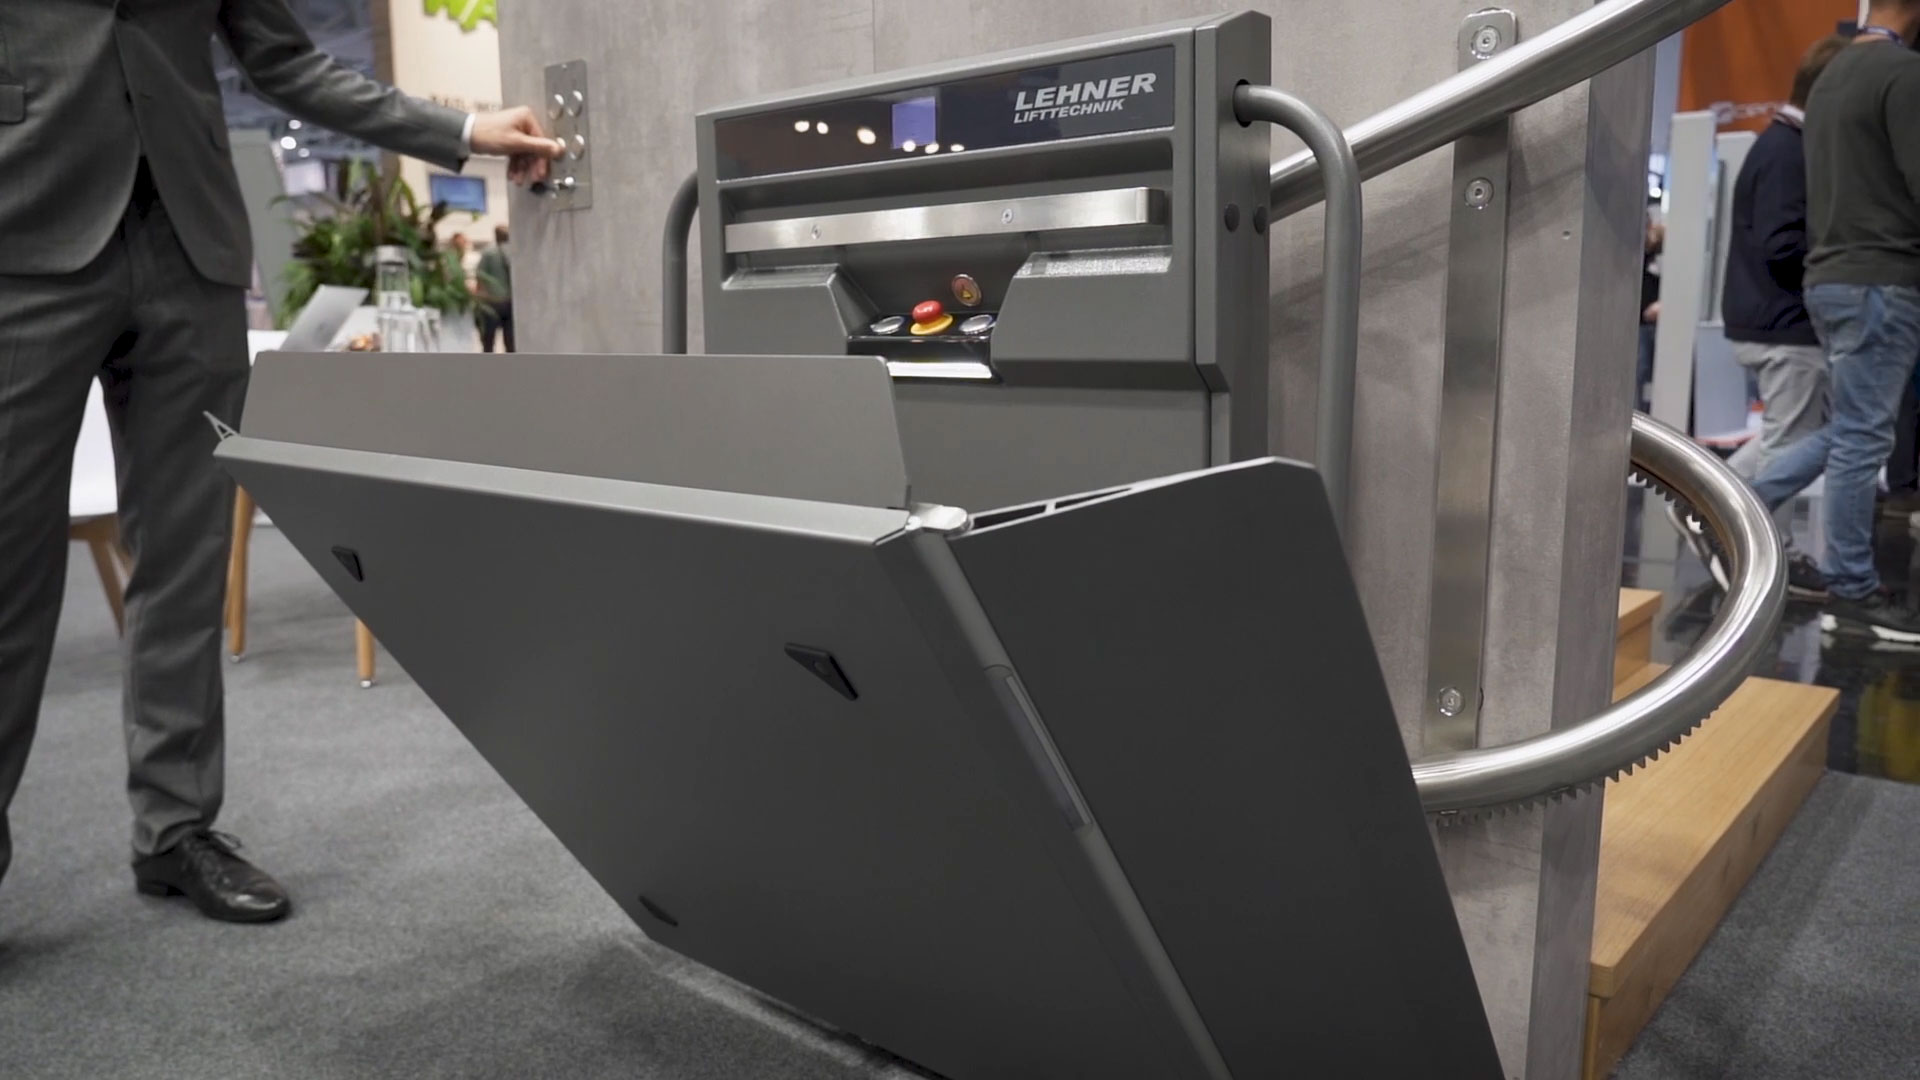 Lehner lift technology accessibility platform stairlift